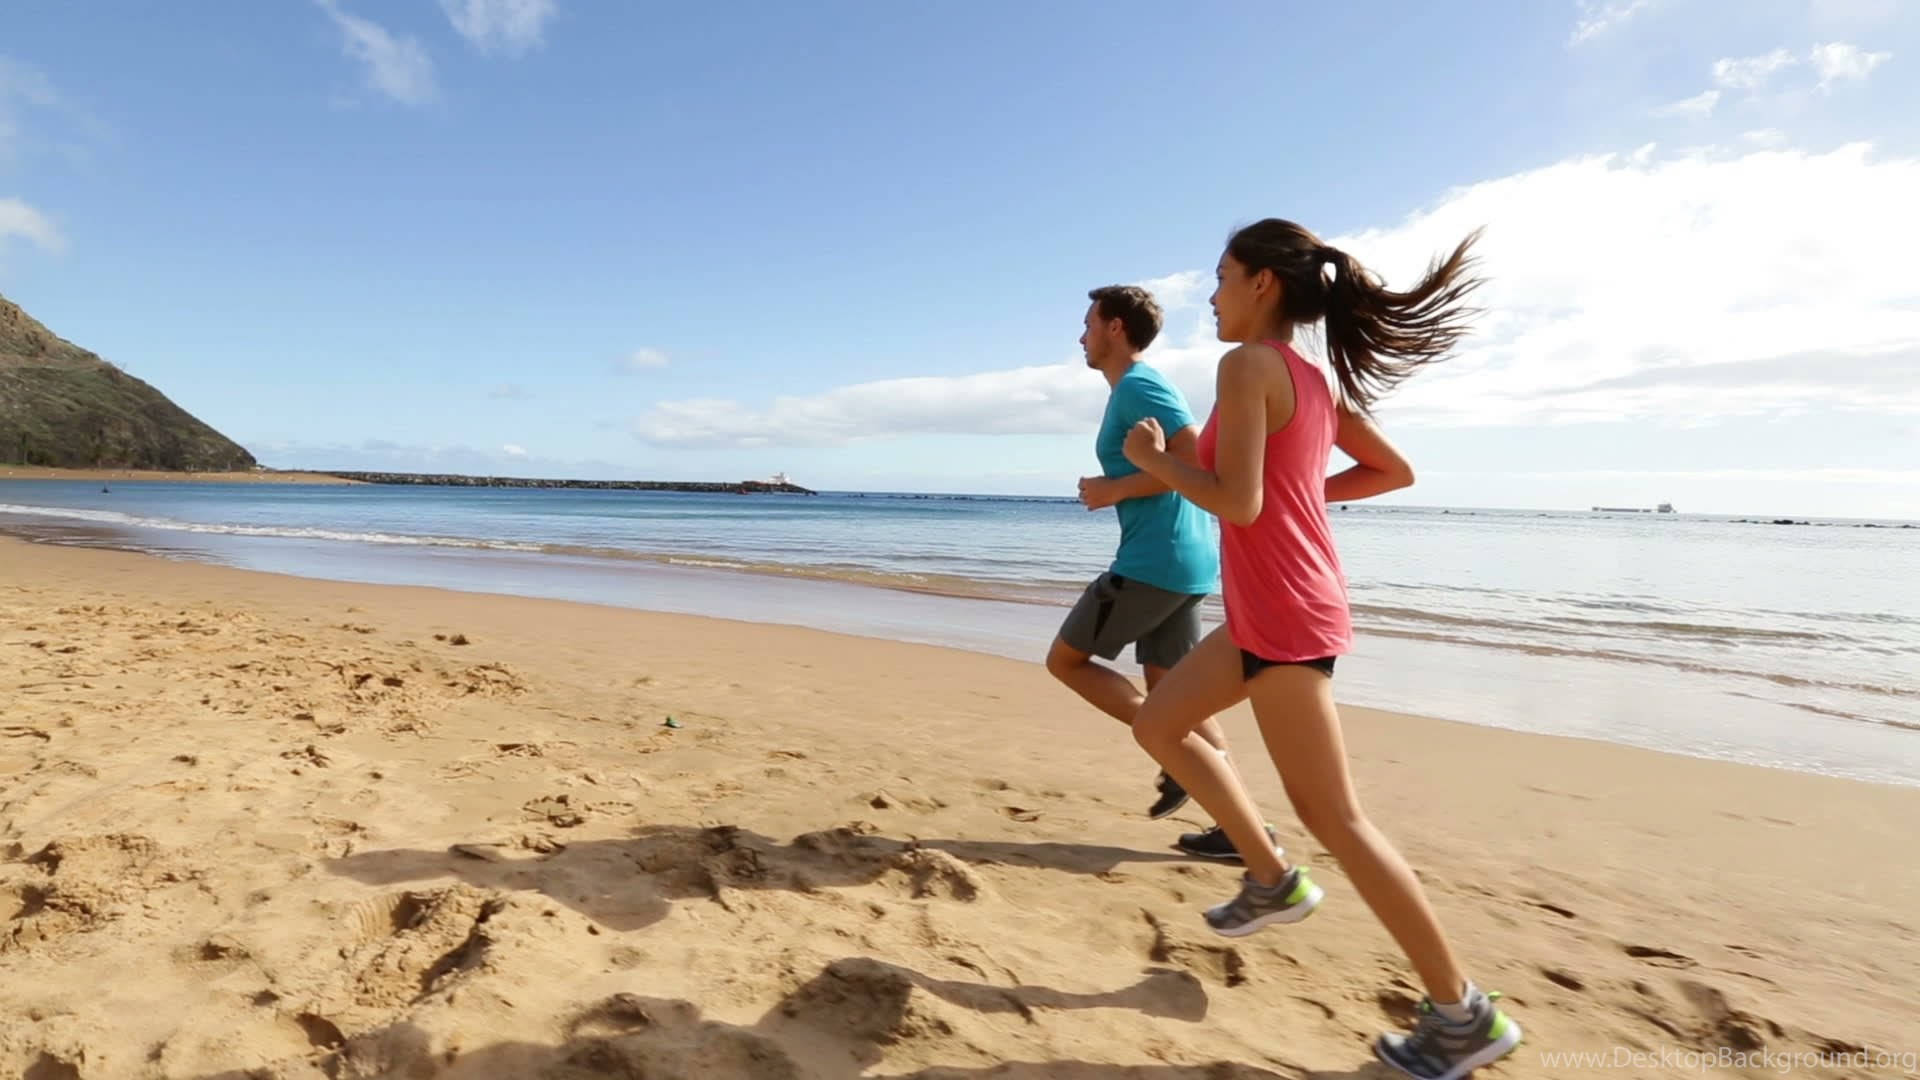 Running Girl And Boy In Beach Background